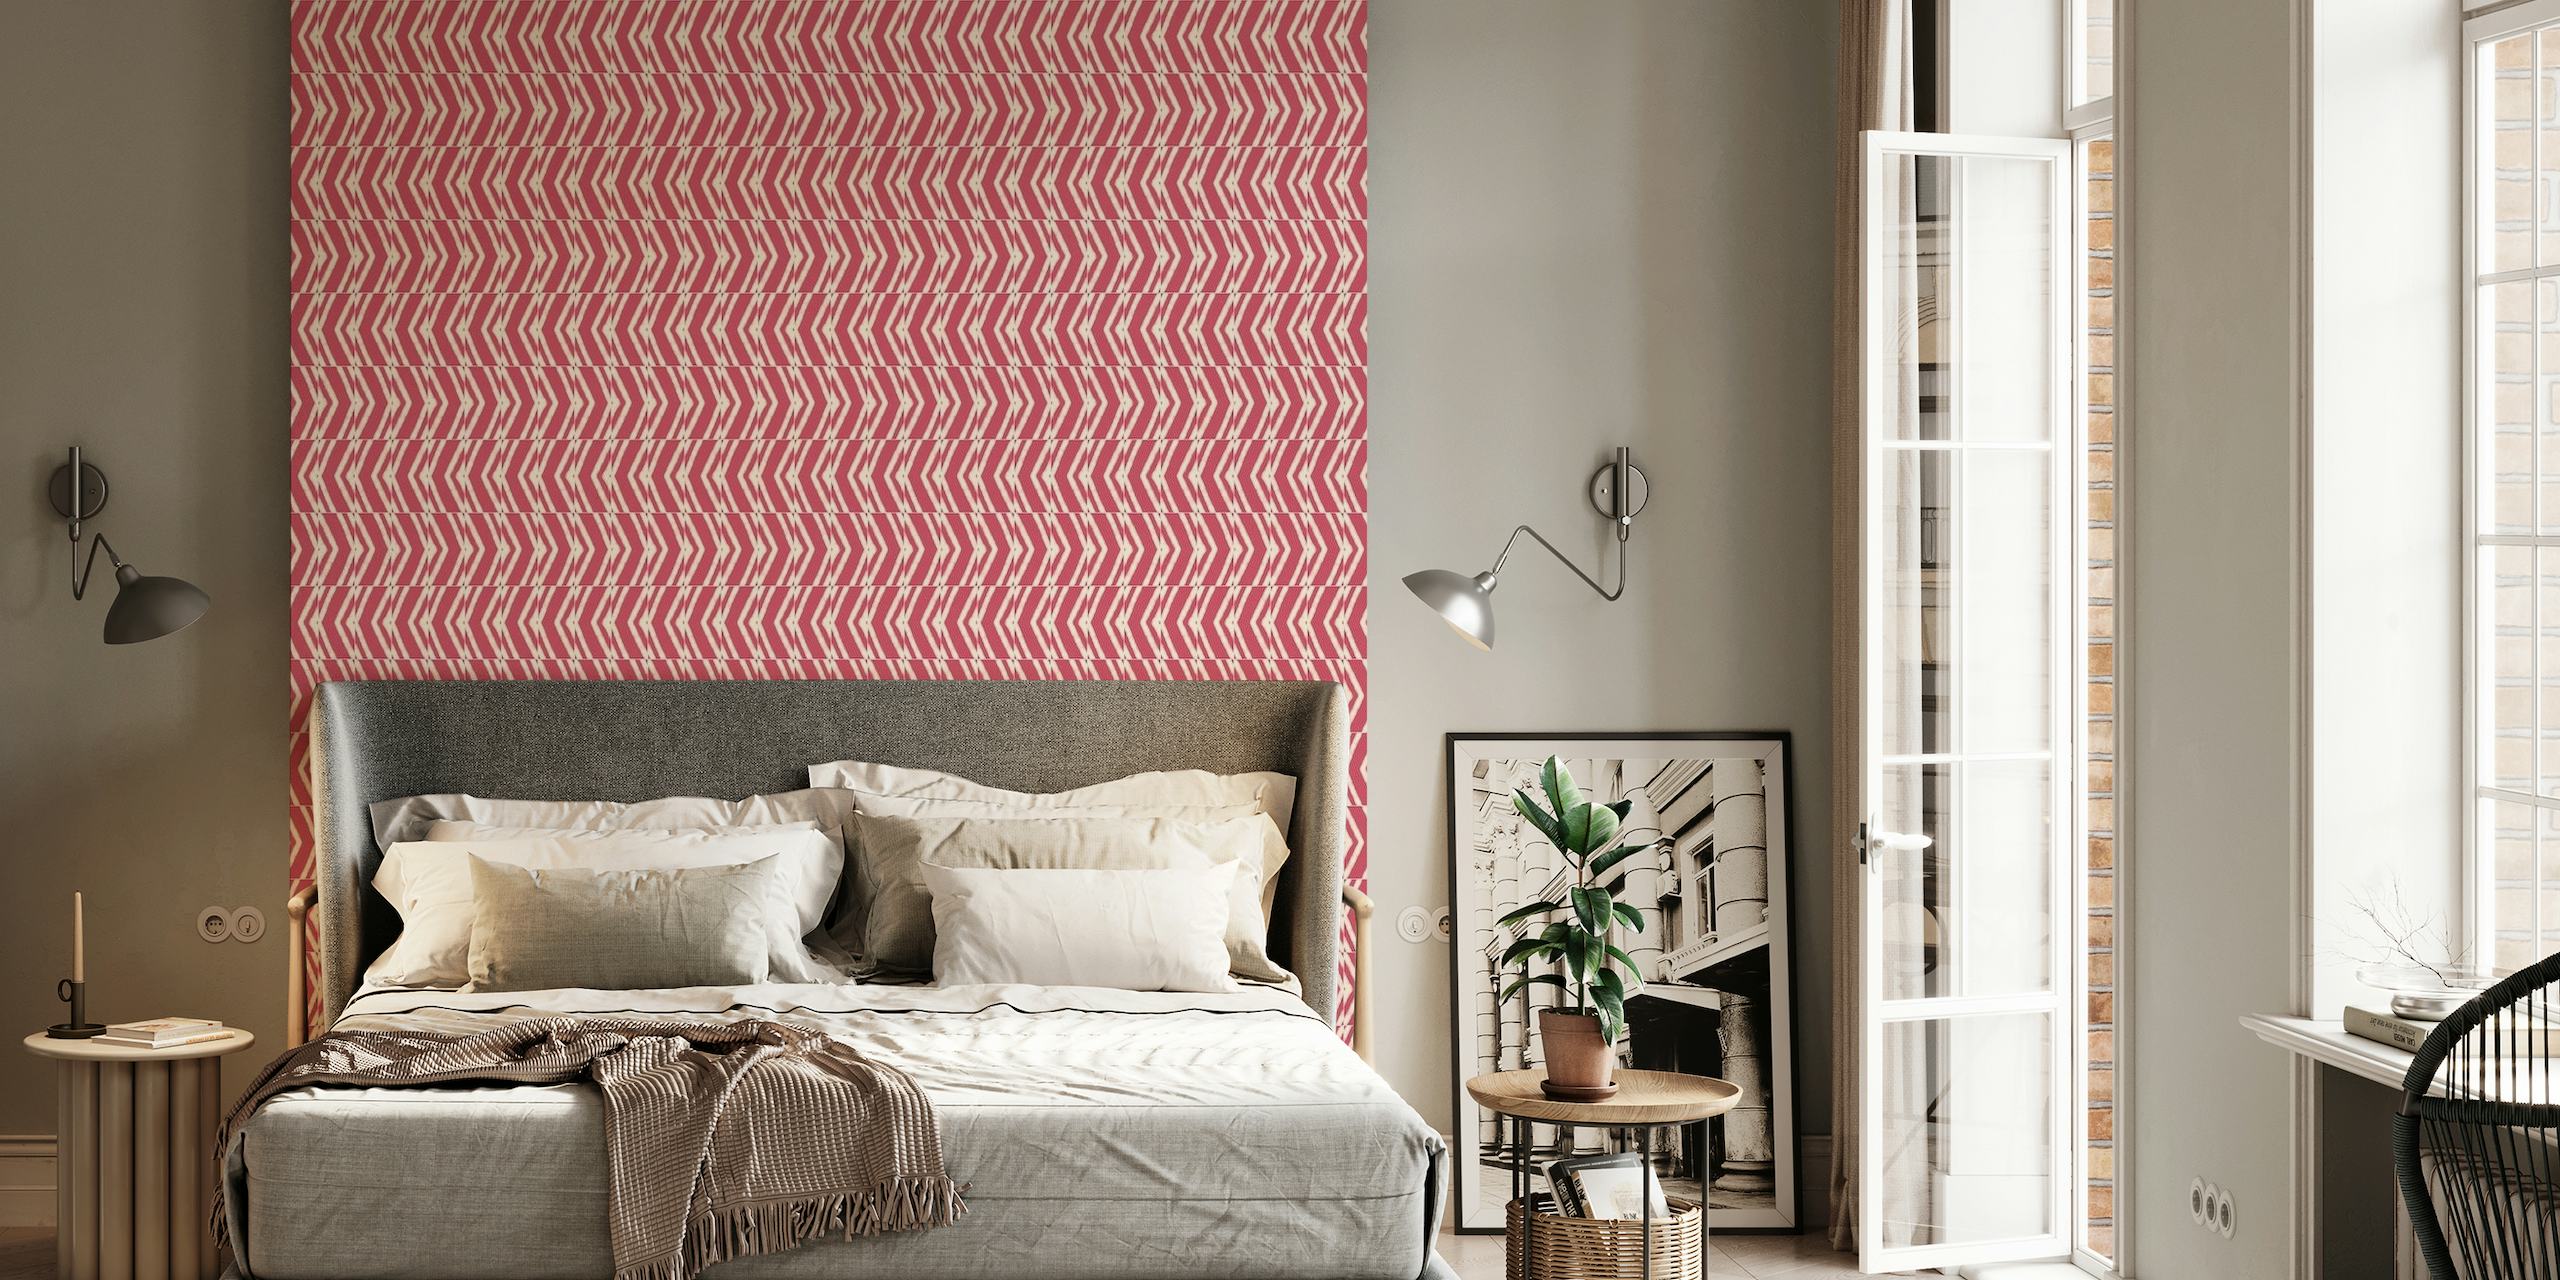 Rustic Rhubarb Arrows Tiles wallpaper